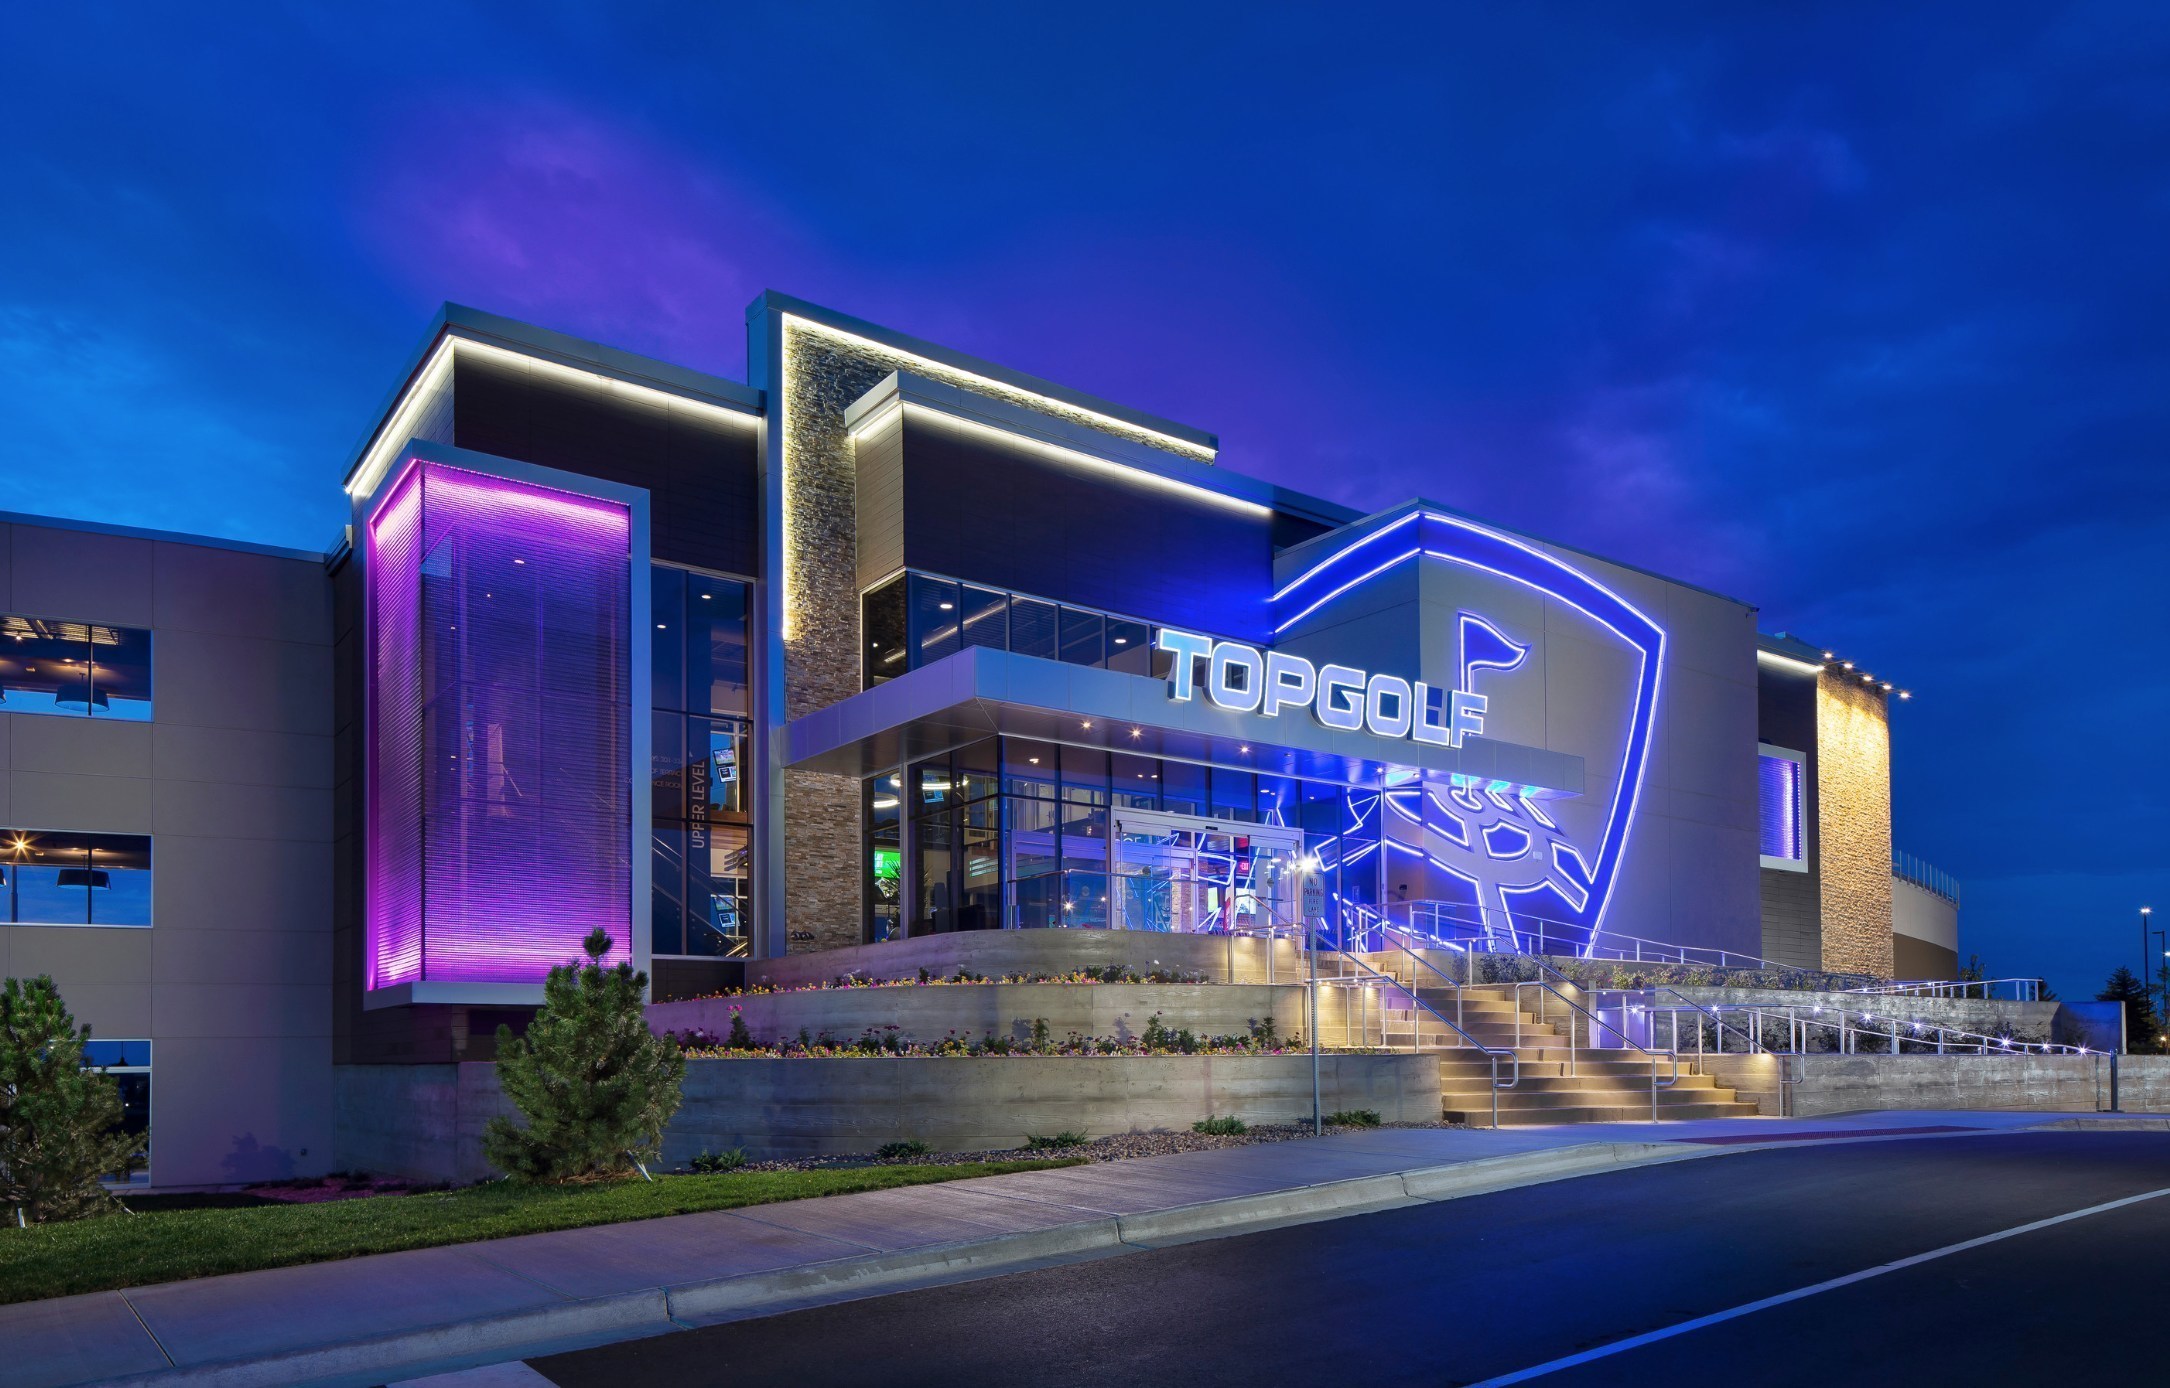 Big screen for sports - Picture of Topgolf, Las Vegas - Tripadvisor